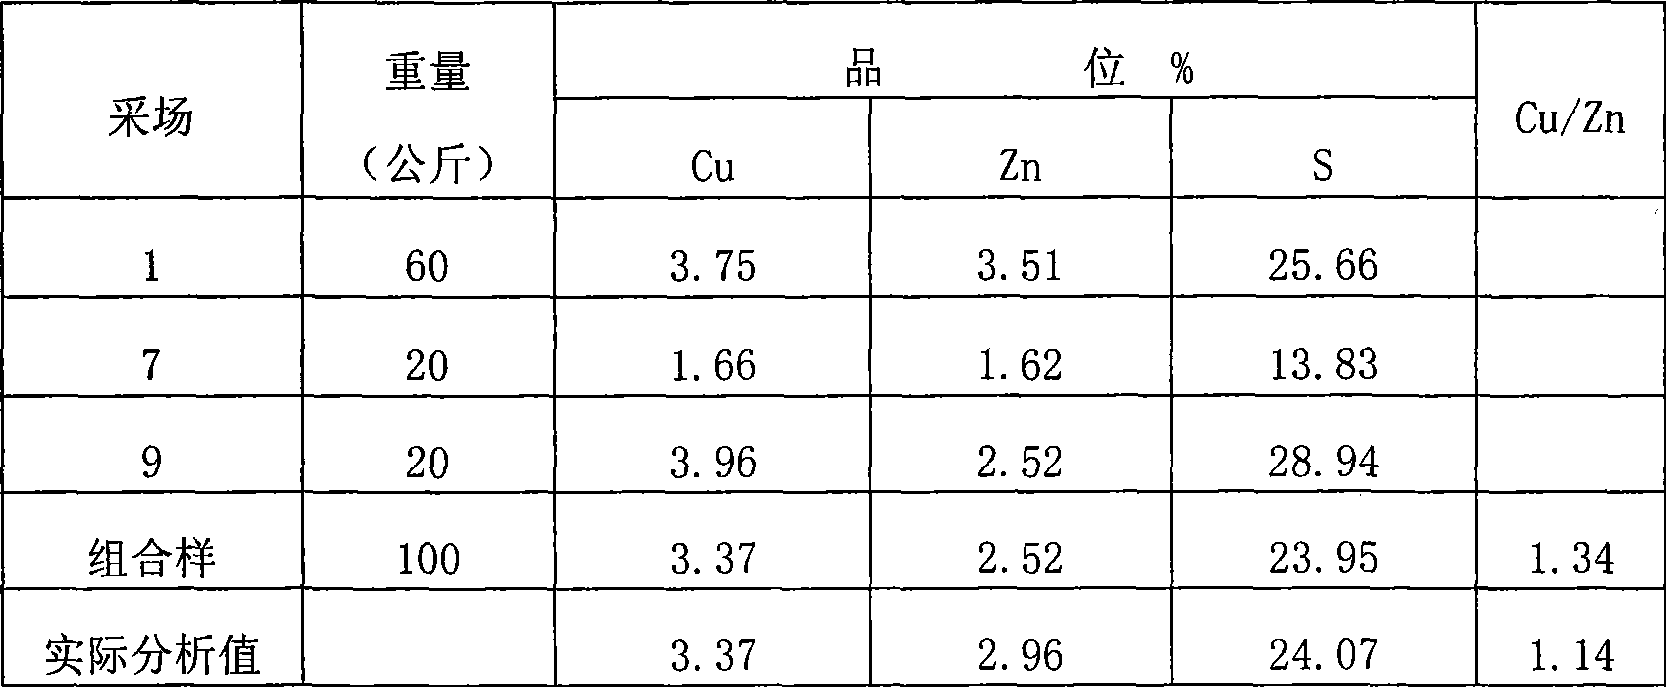 Copper-zinc separation beneficiation method